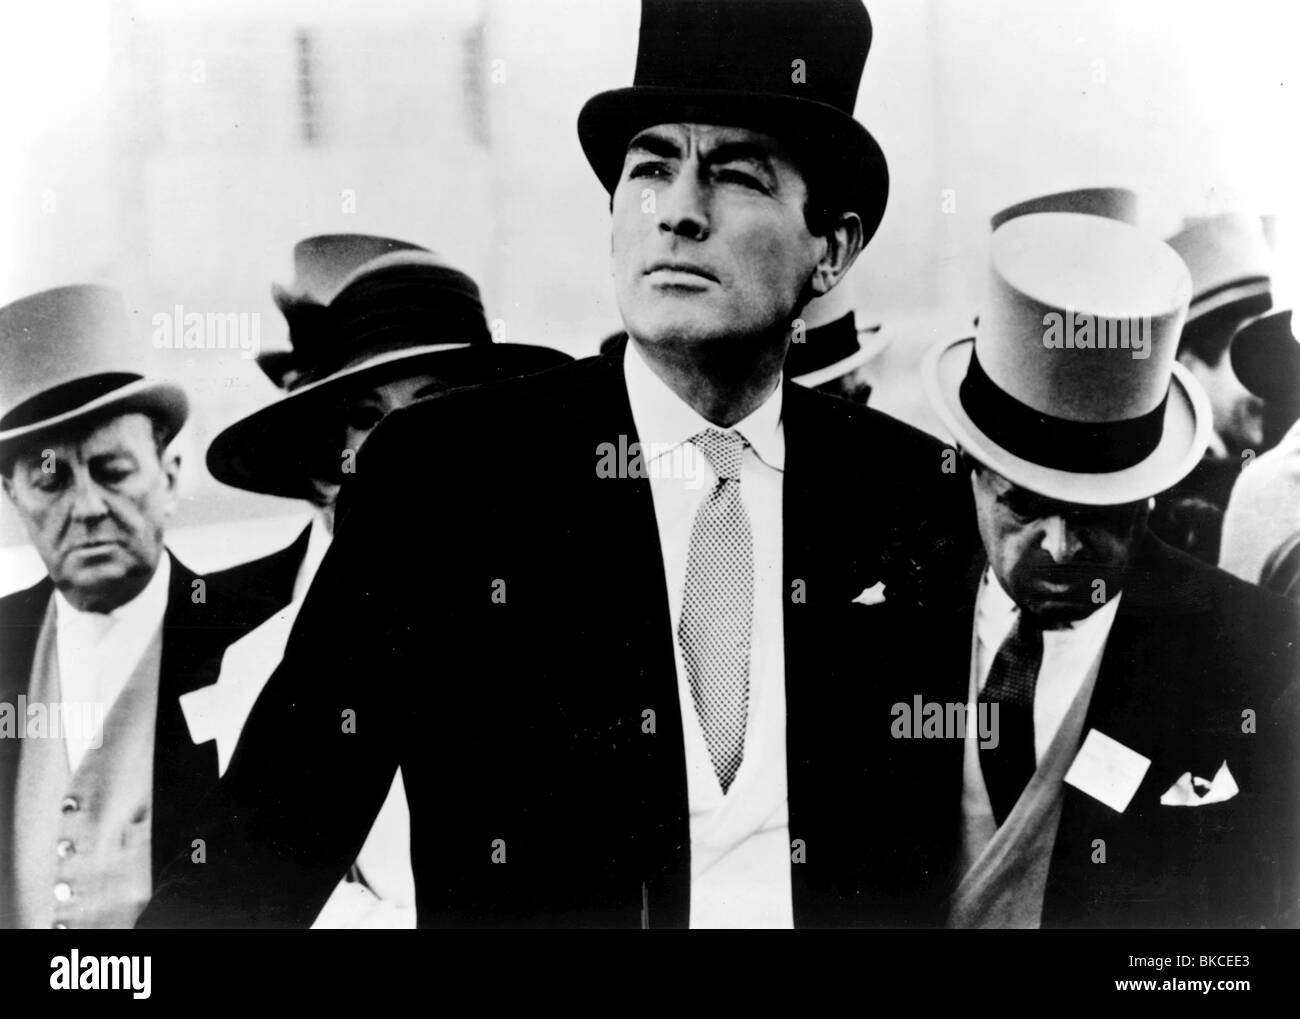 ARABESQUE -1966 Gregory Peck Foto Stock